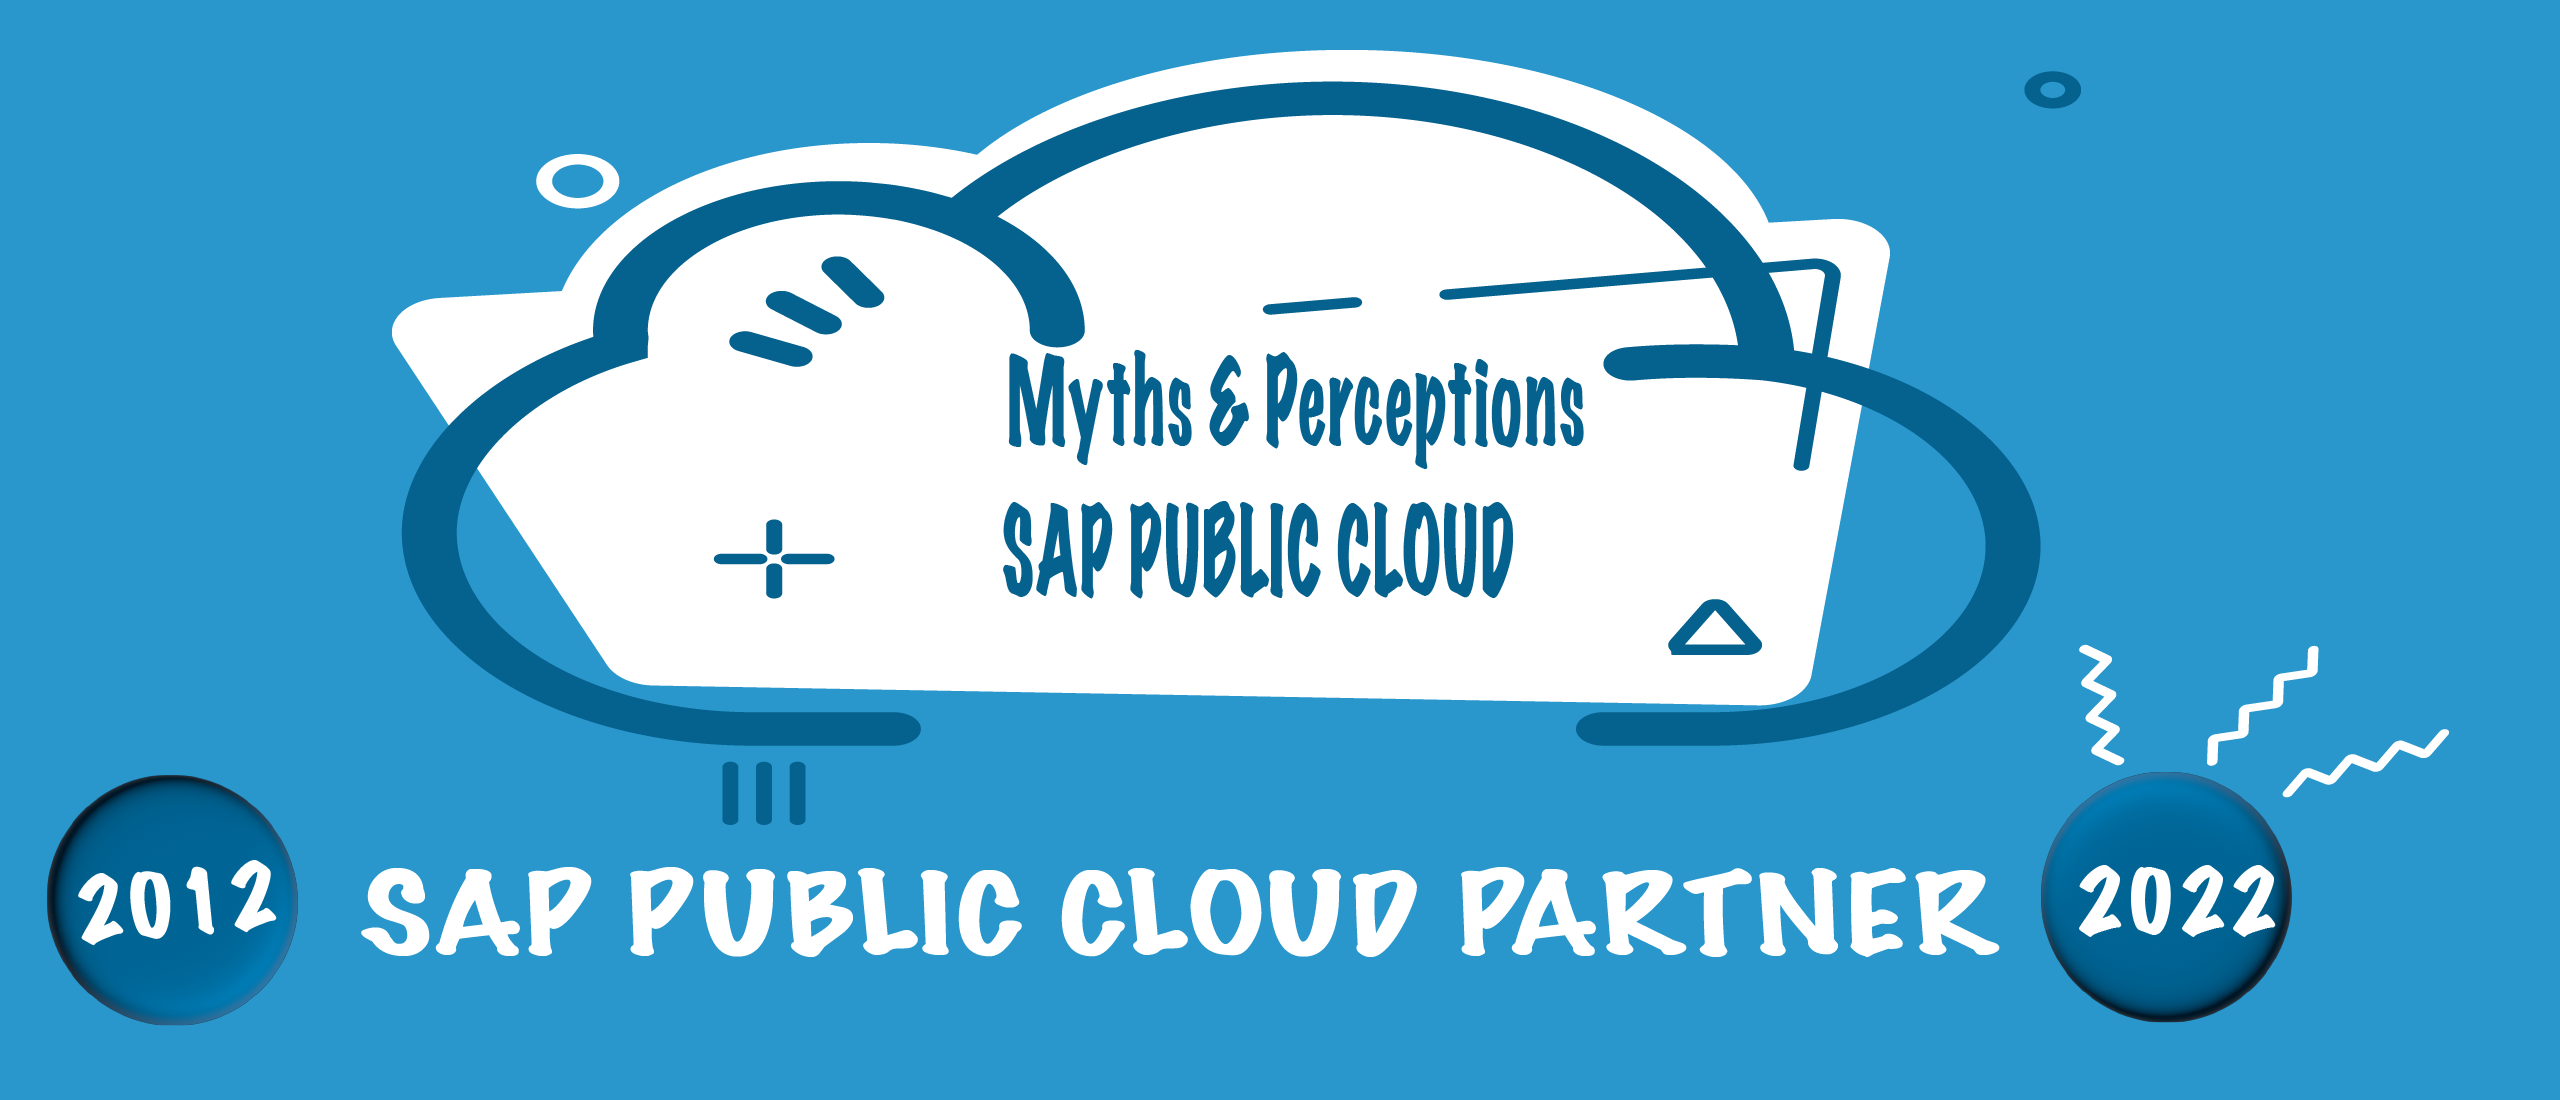 SAP S/4HANA Public Cloud: Myths and Perceptions - Part 1